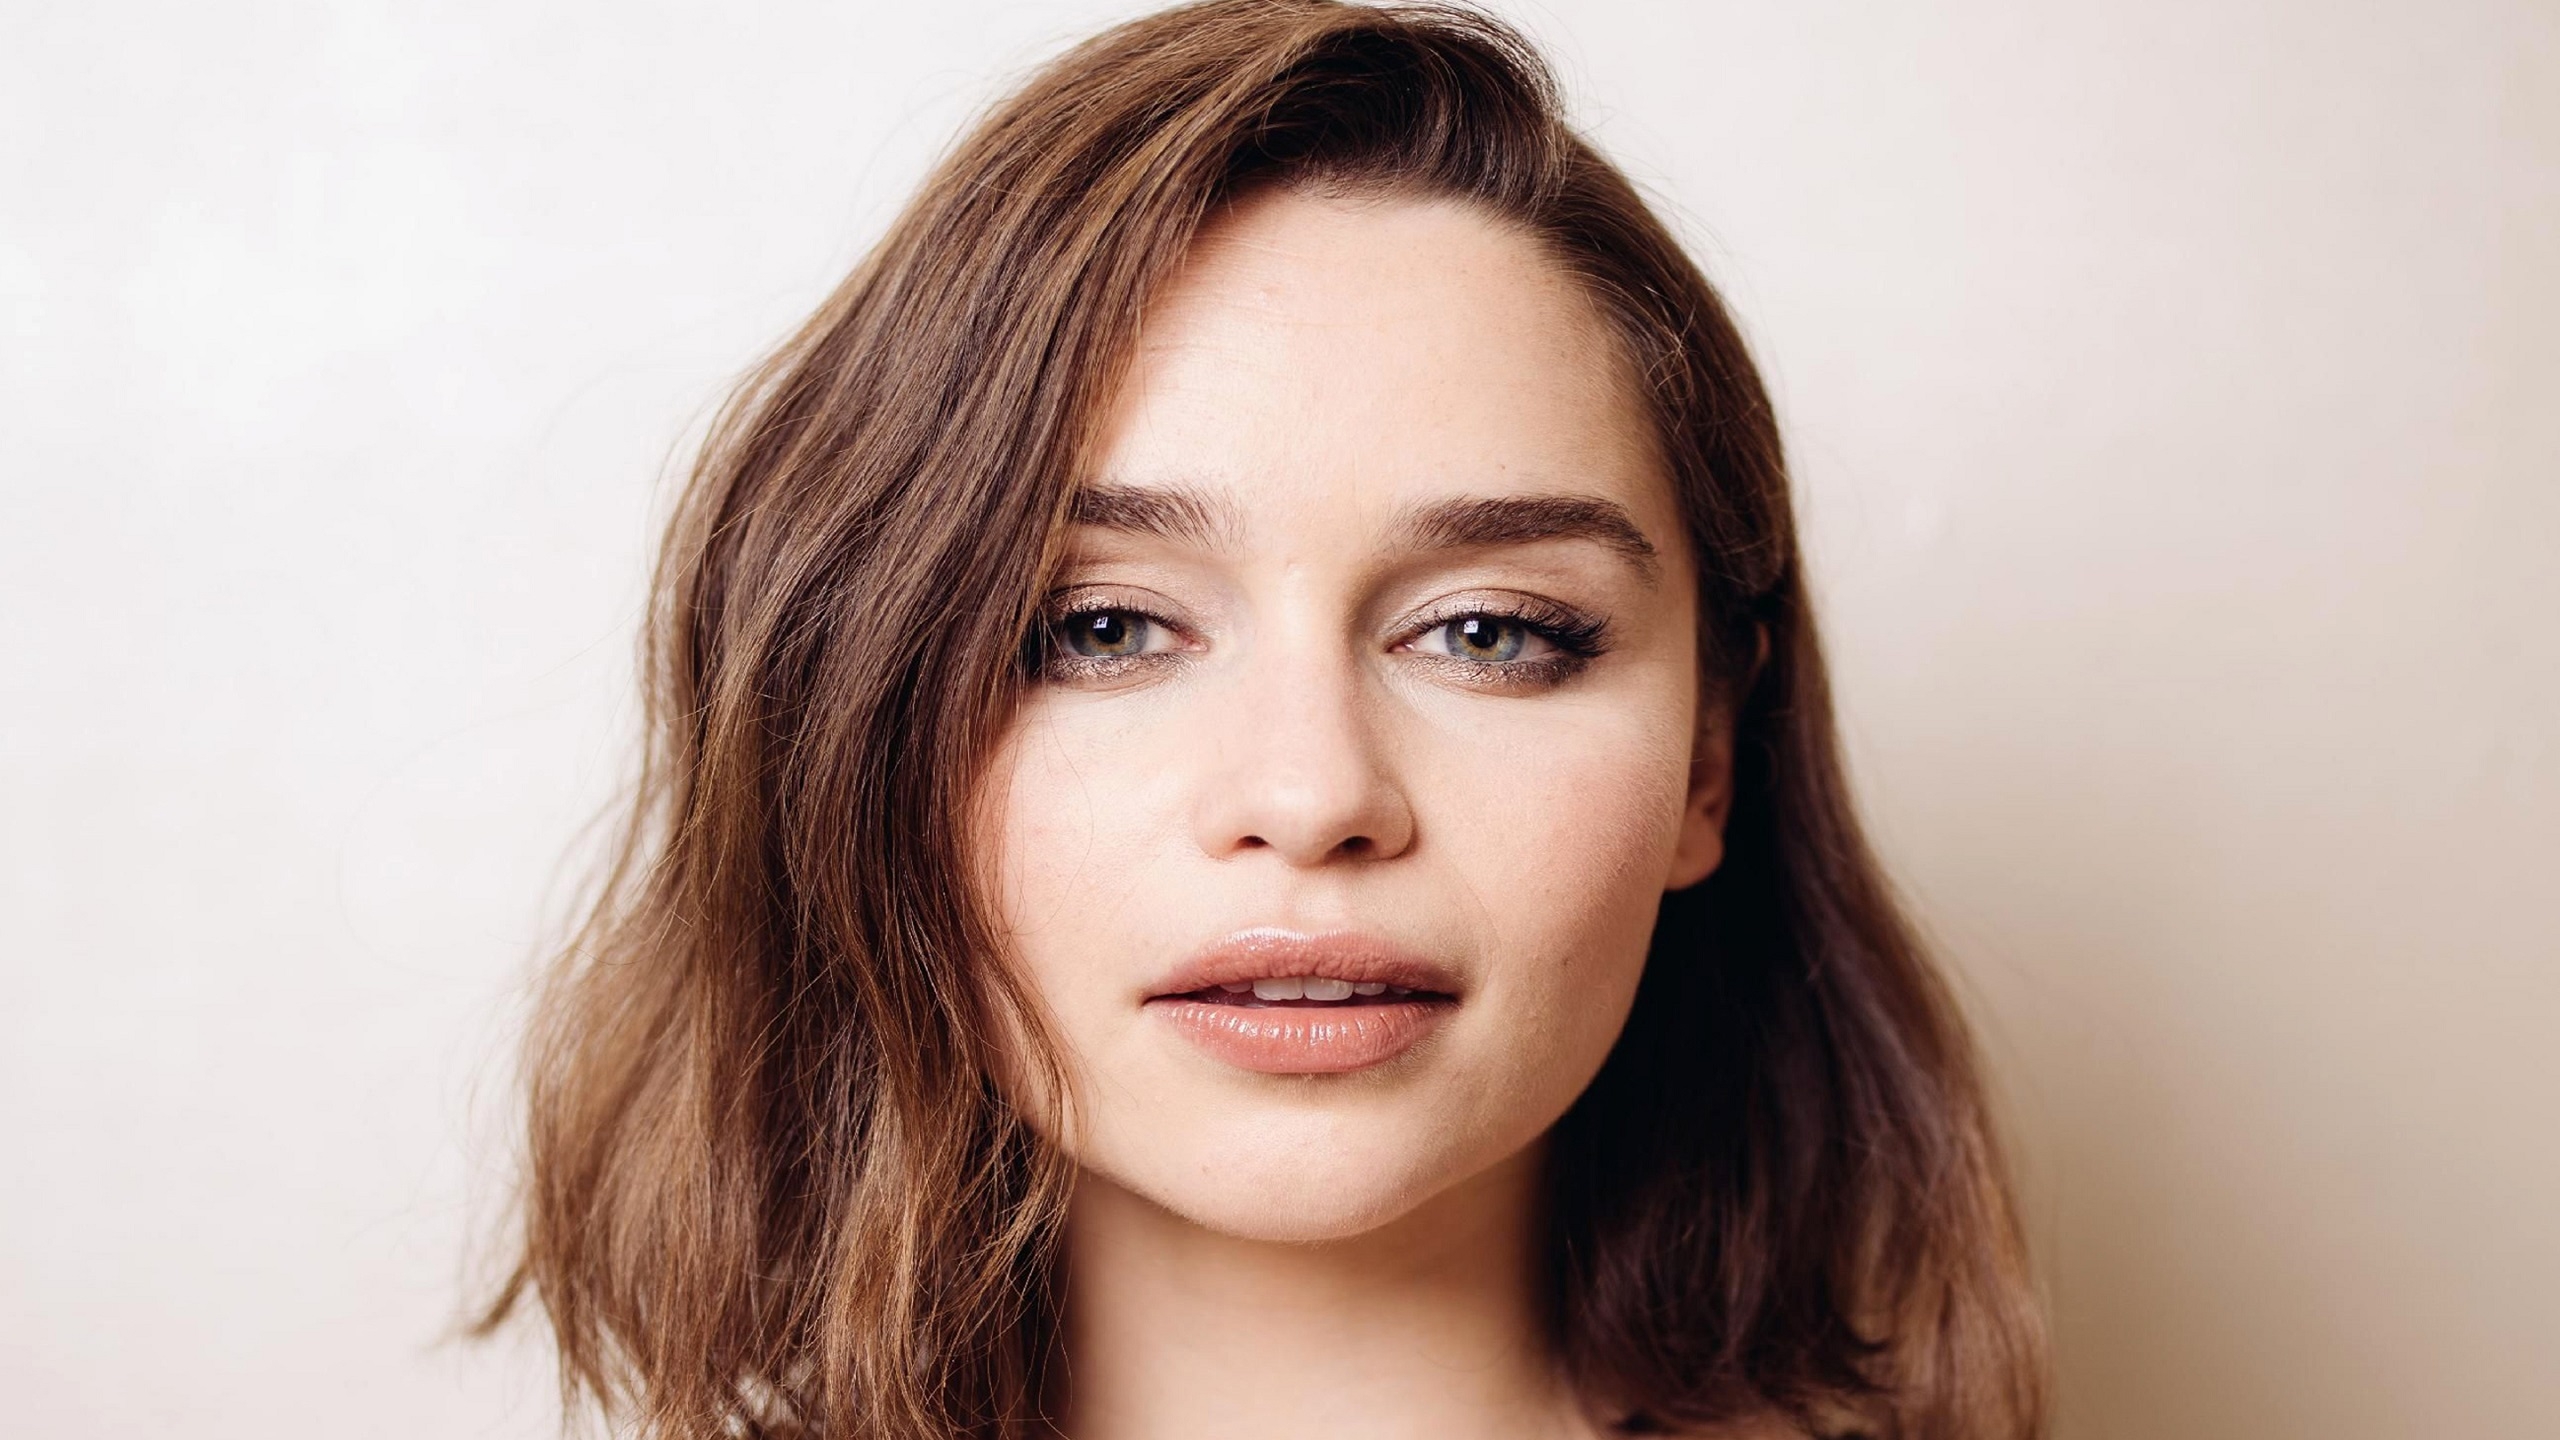 Emilia Clarke Cute Face for 2560 x 1440 HDTV resolution